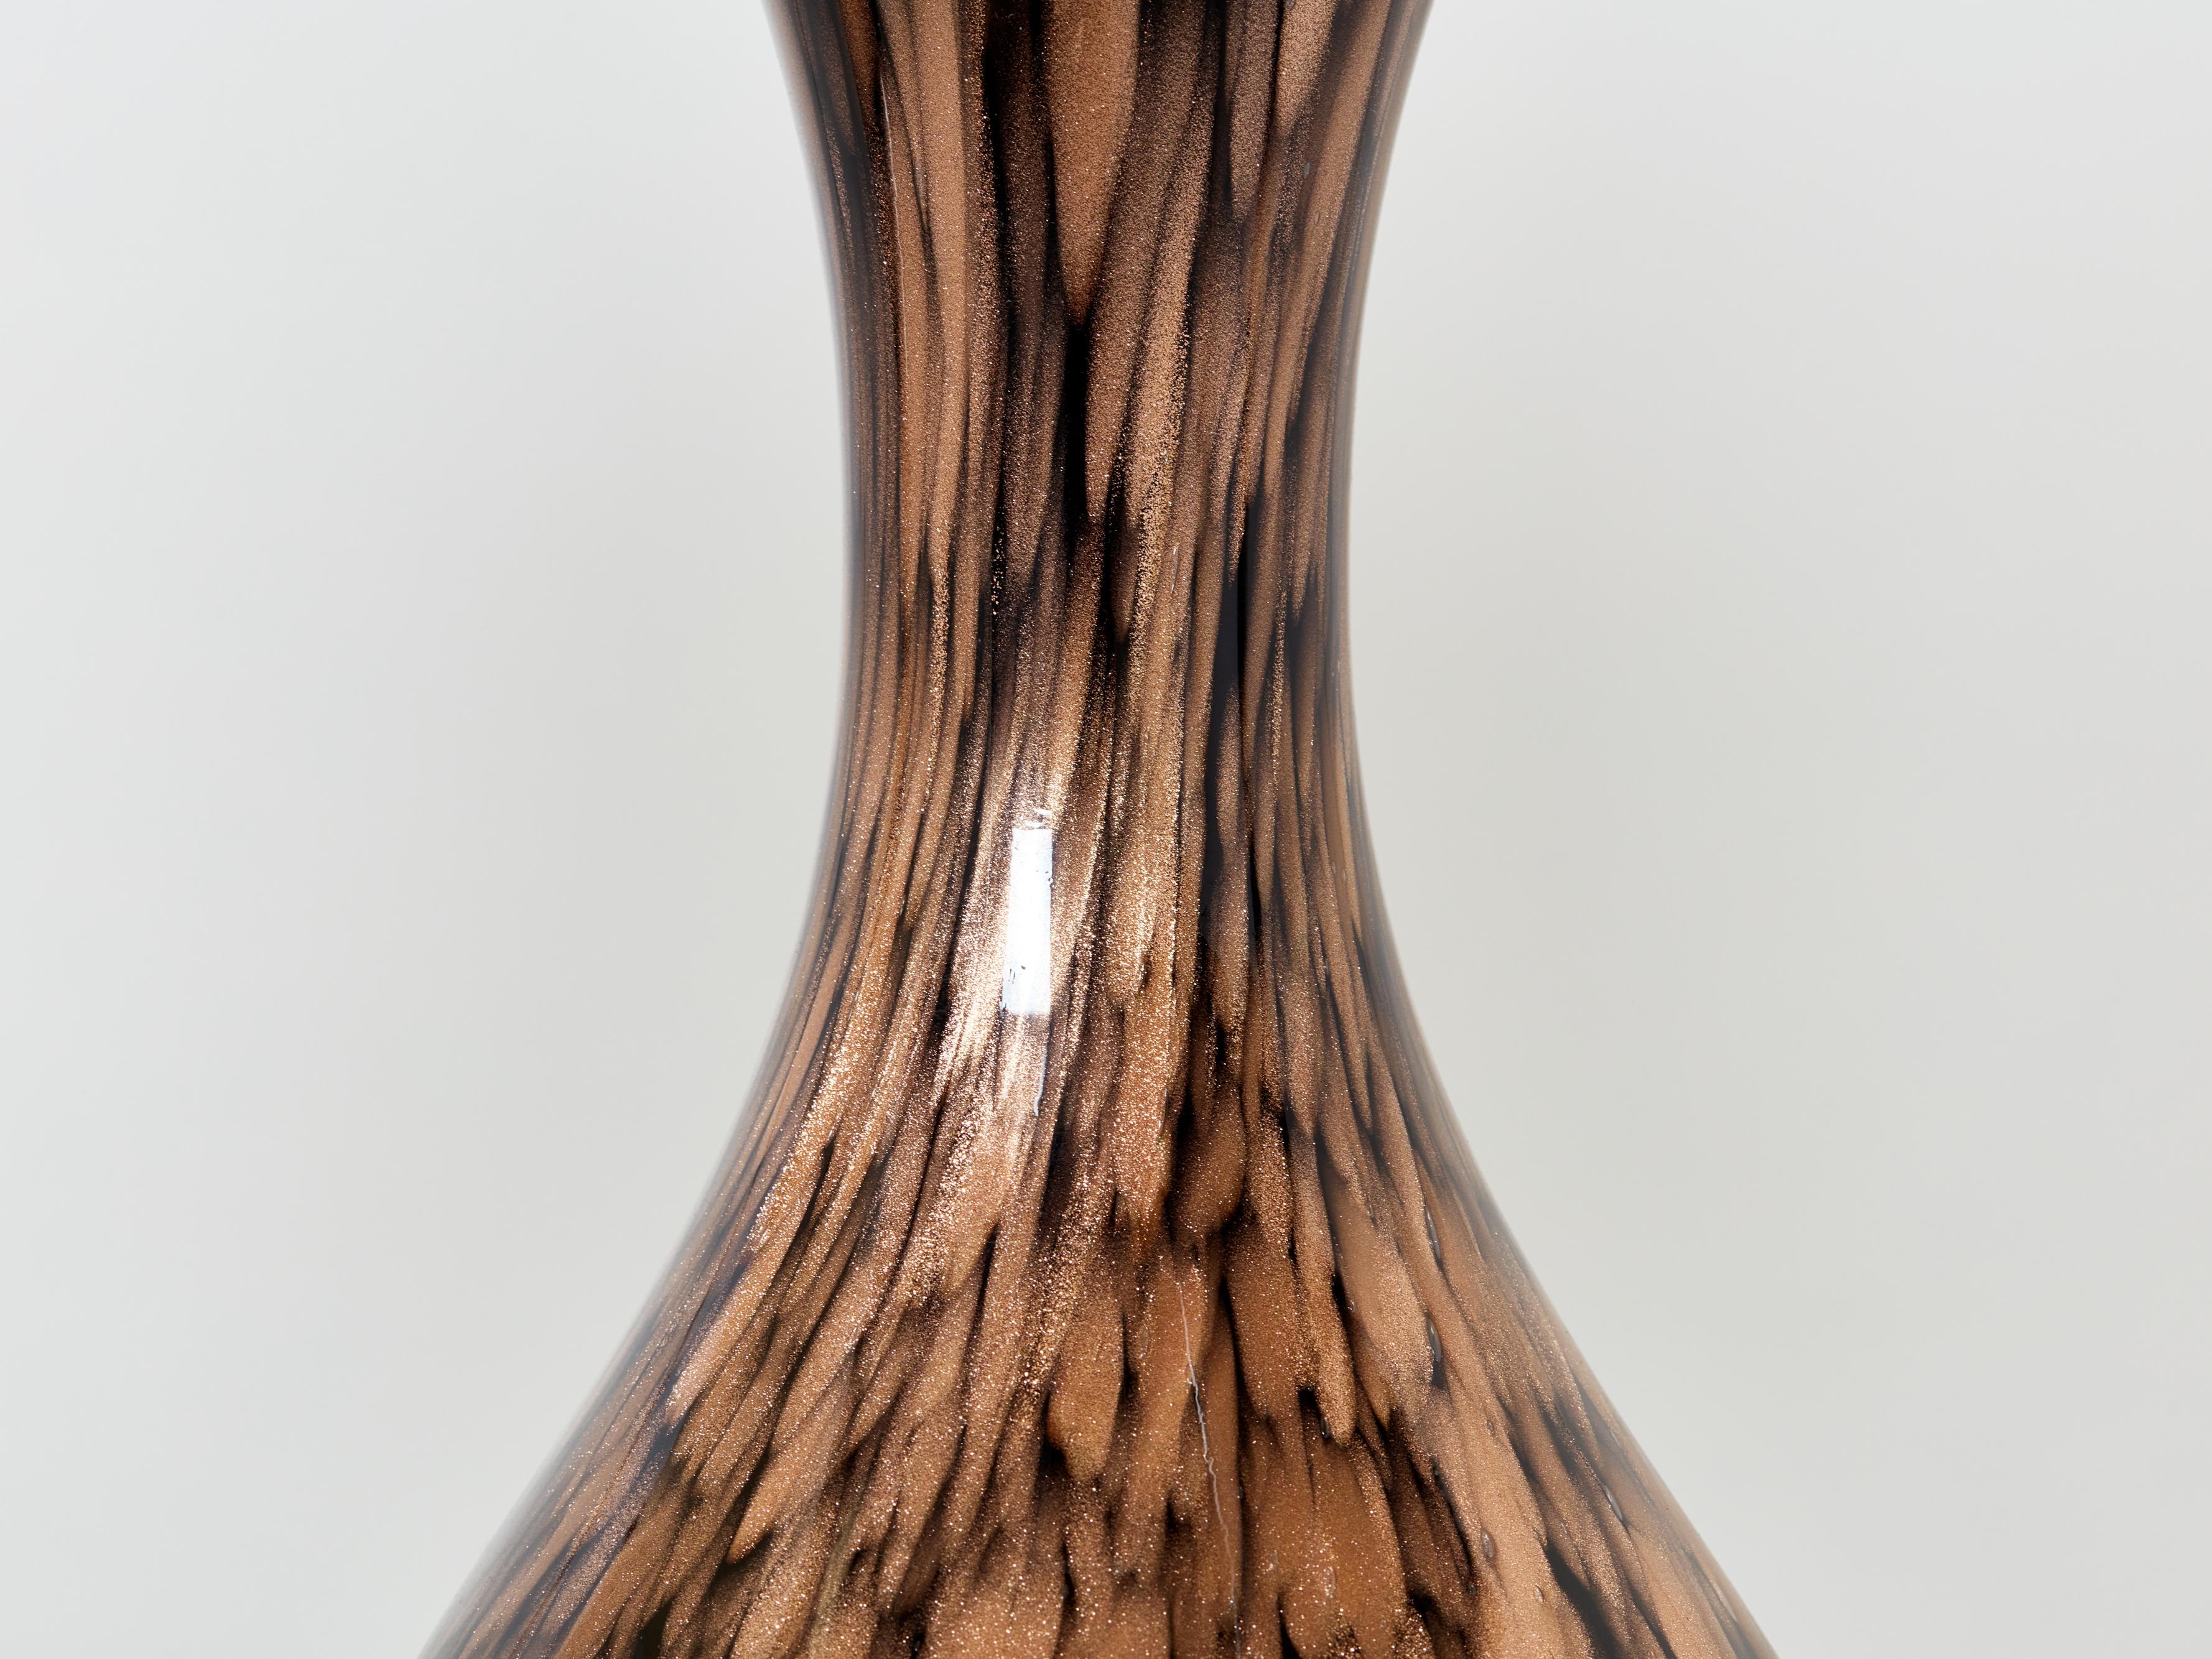 Vincenzo Nason Avventurina Murano Glass Table Lamps 1960s For Sale 5